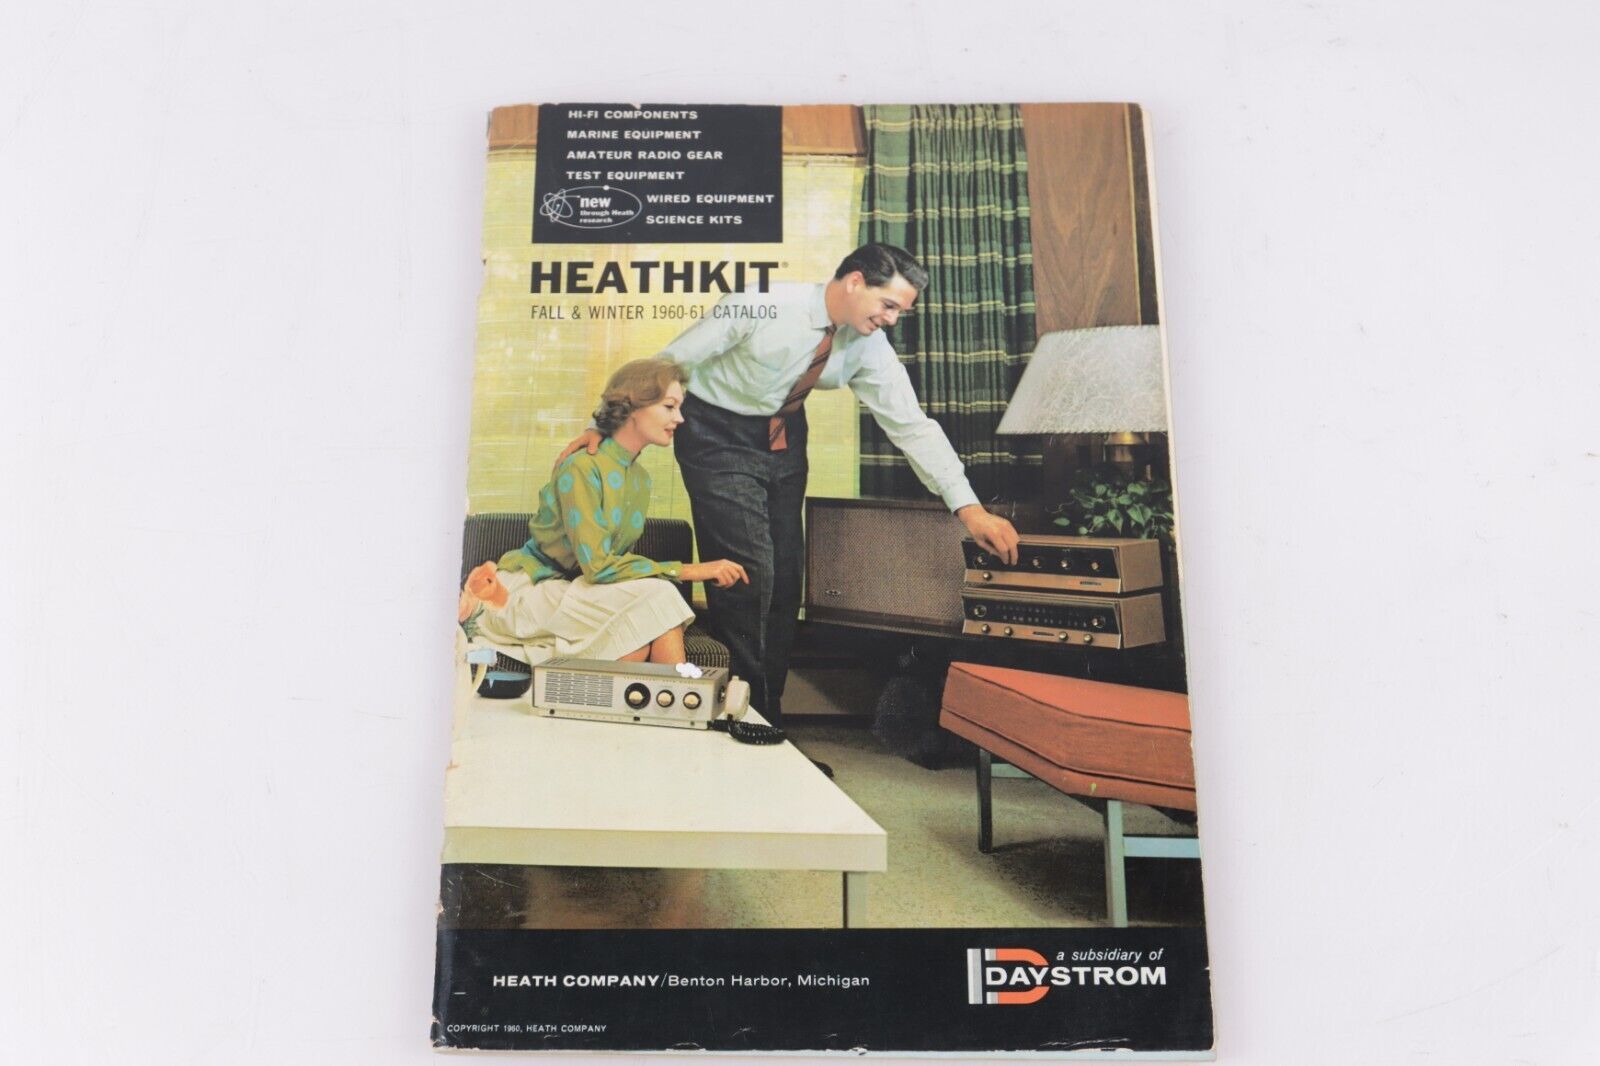 Heathkit Daystrom 1960-61 Product Catalog==Uncommon & Original